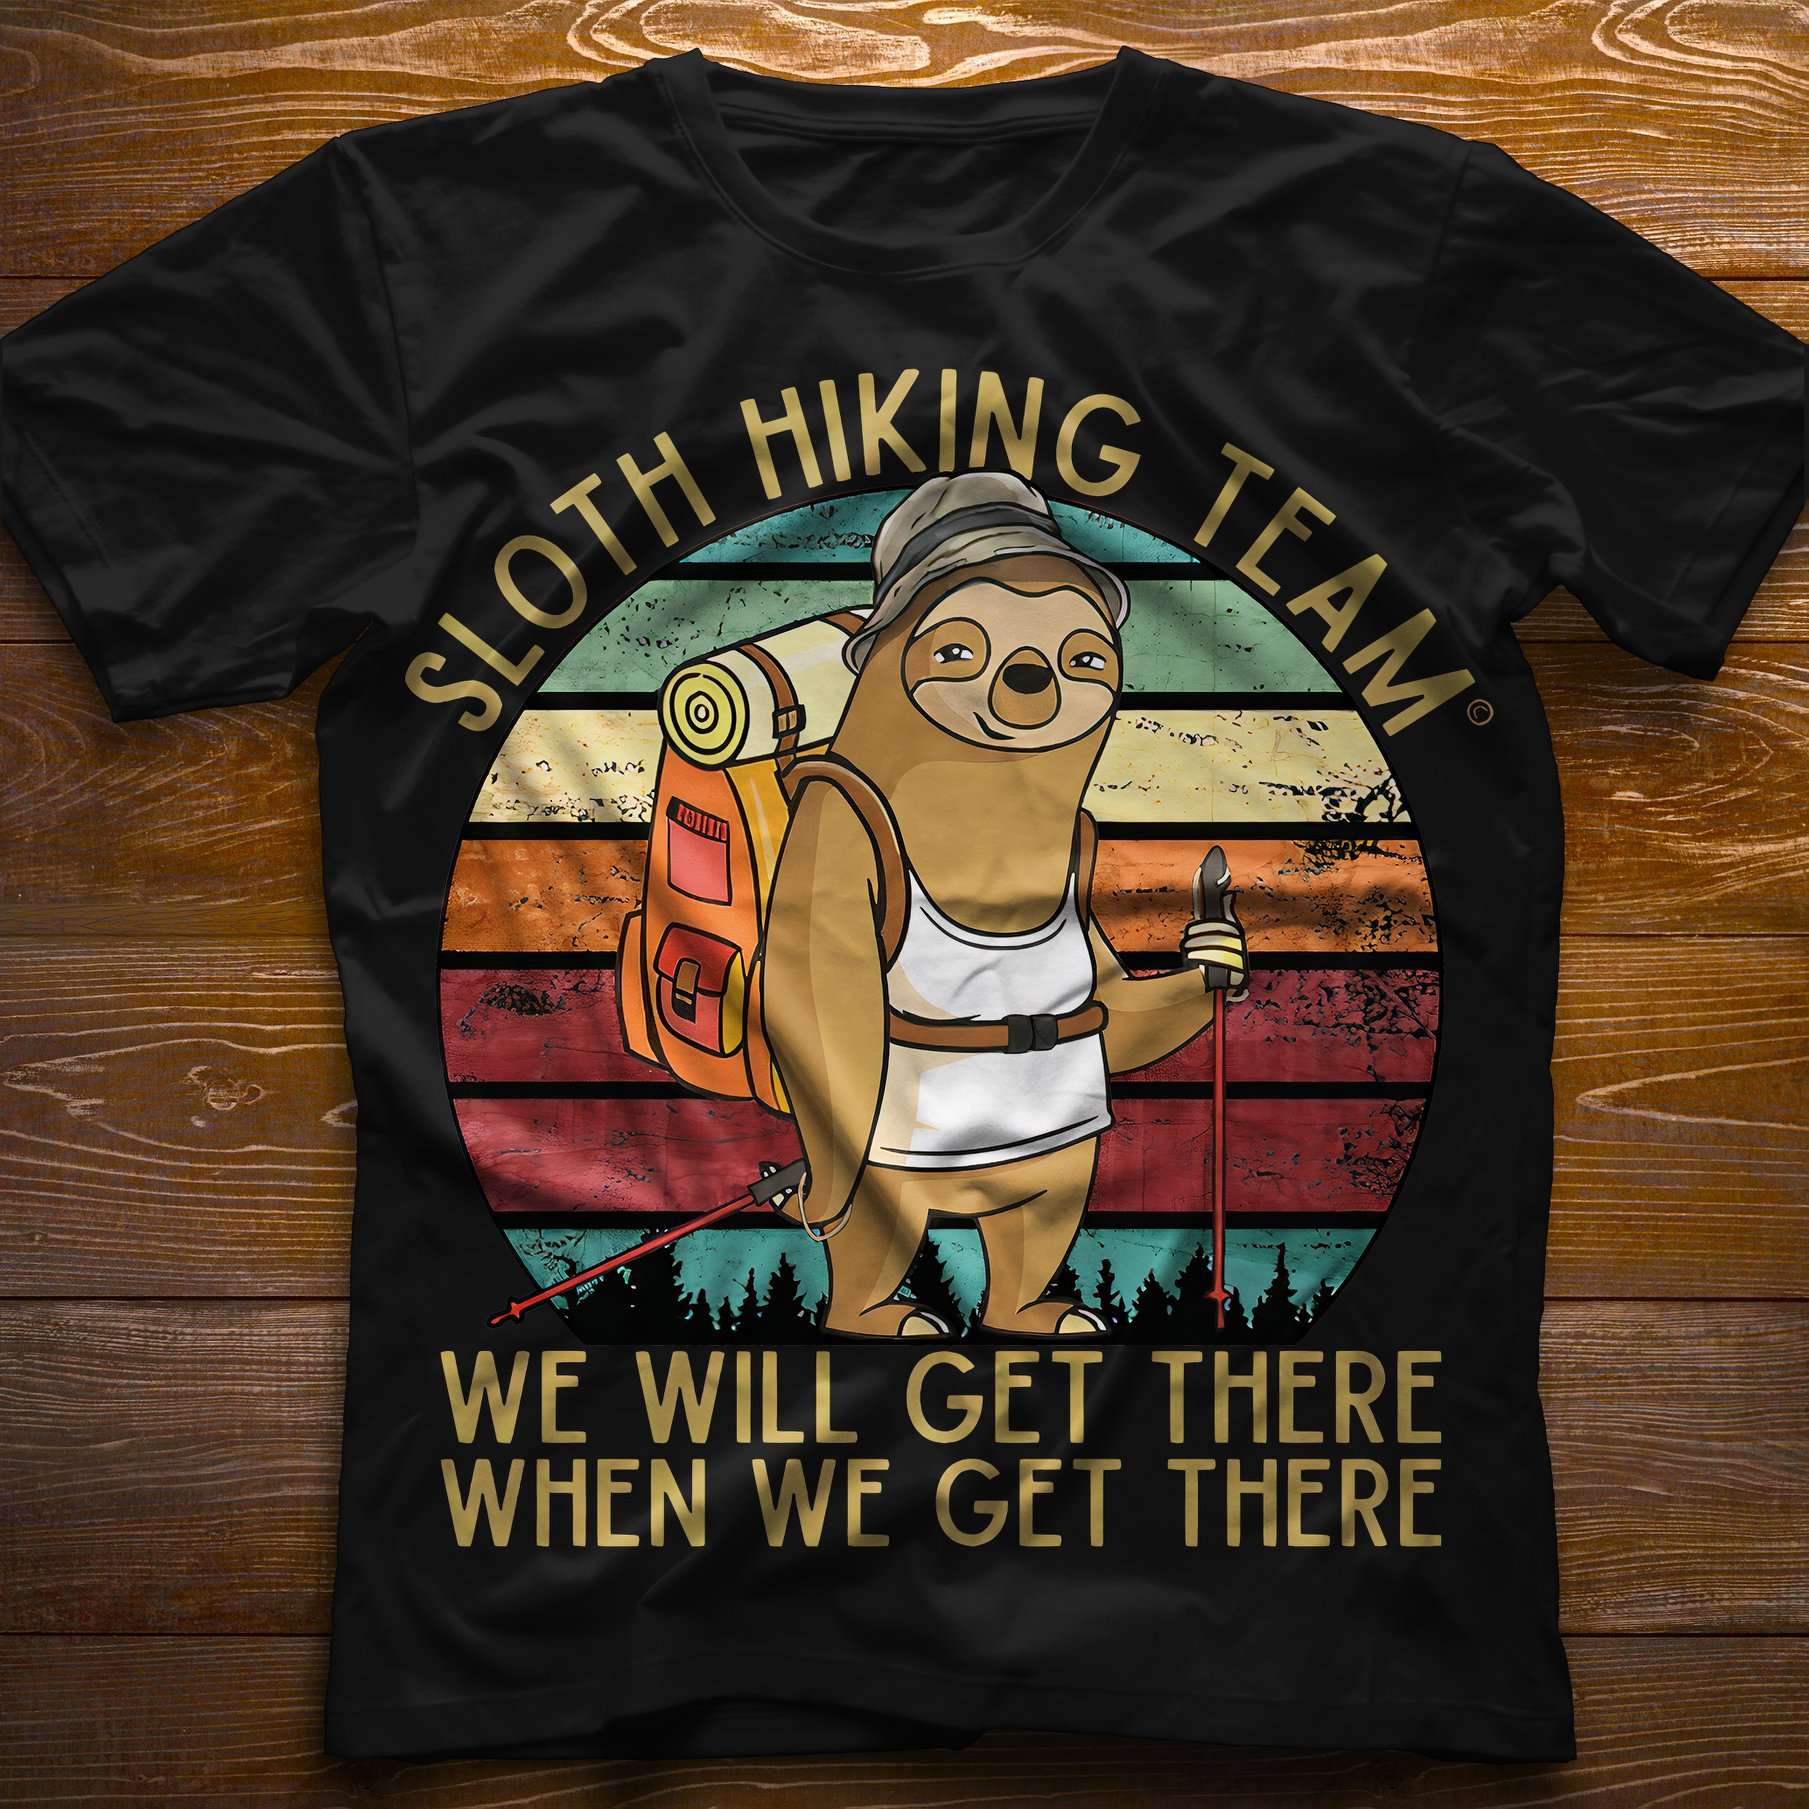 Sloth hiking team - Lazy sloth hiking team, gift for hiking people